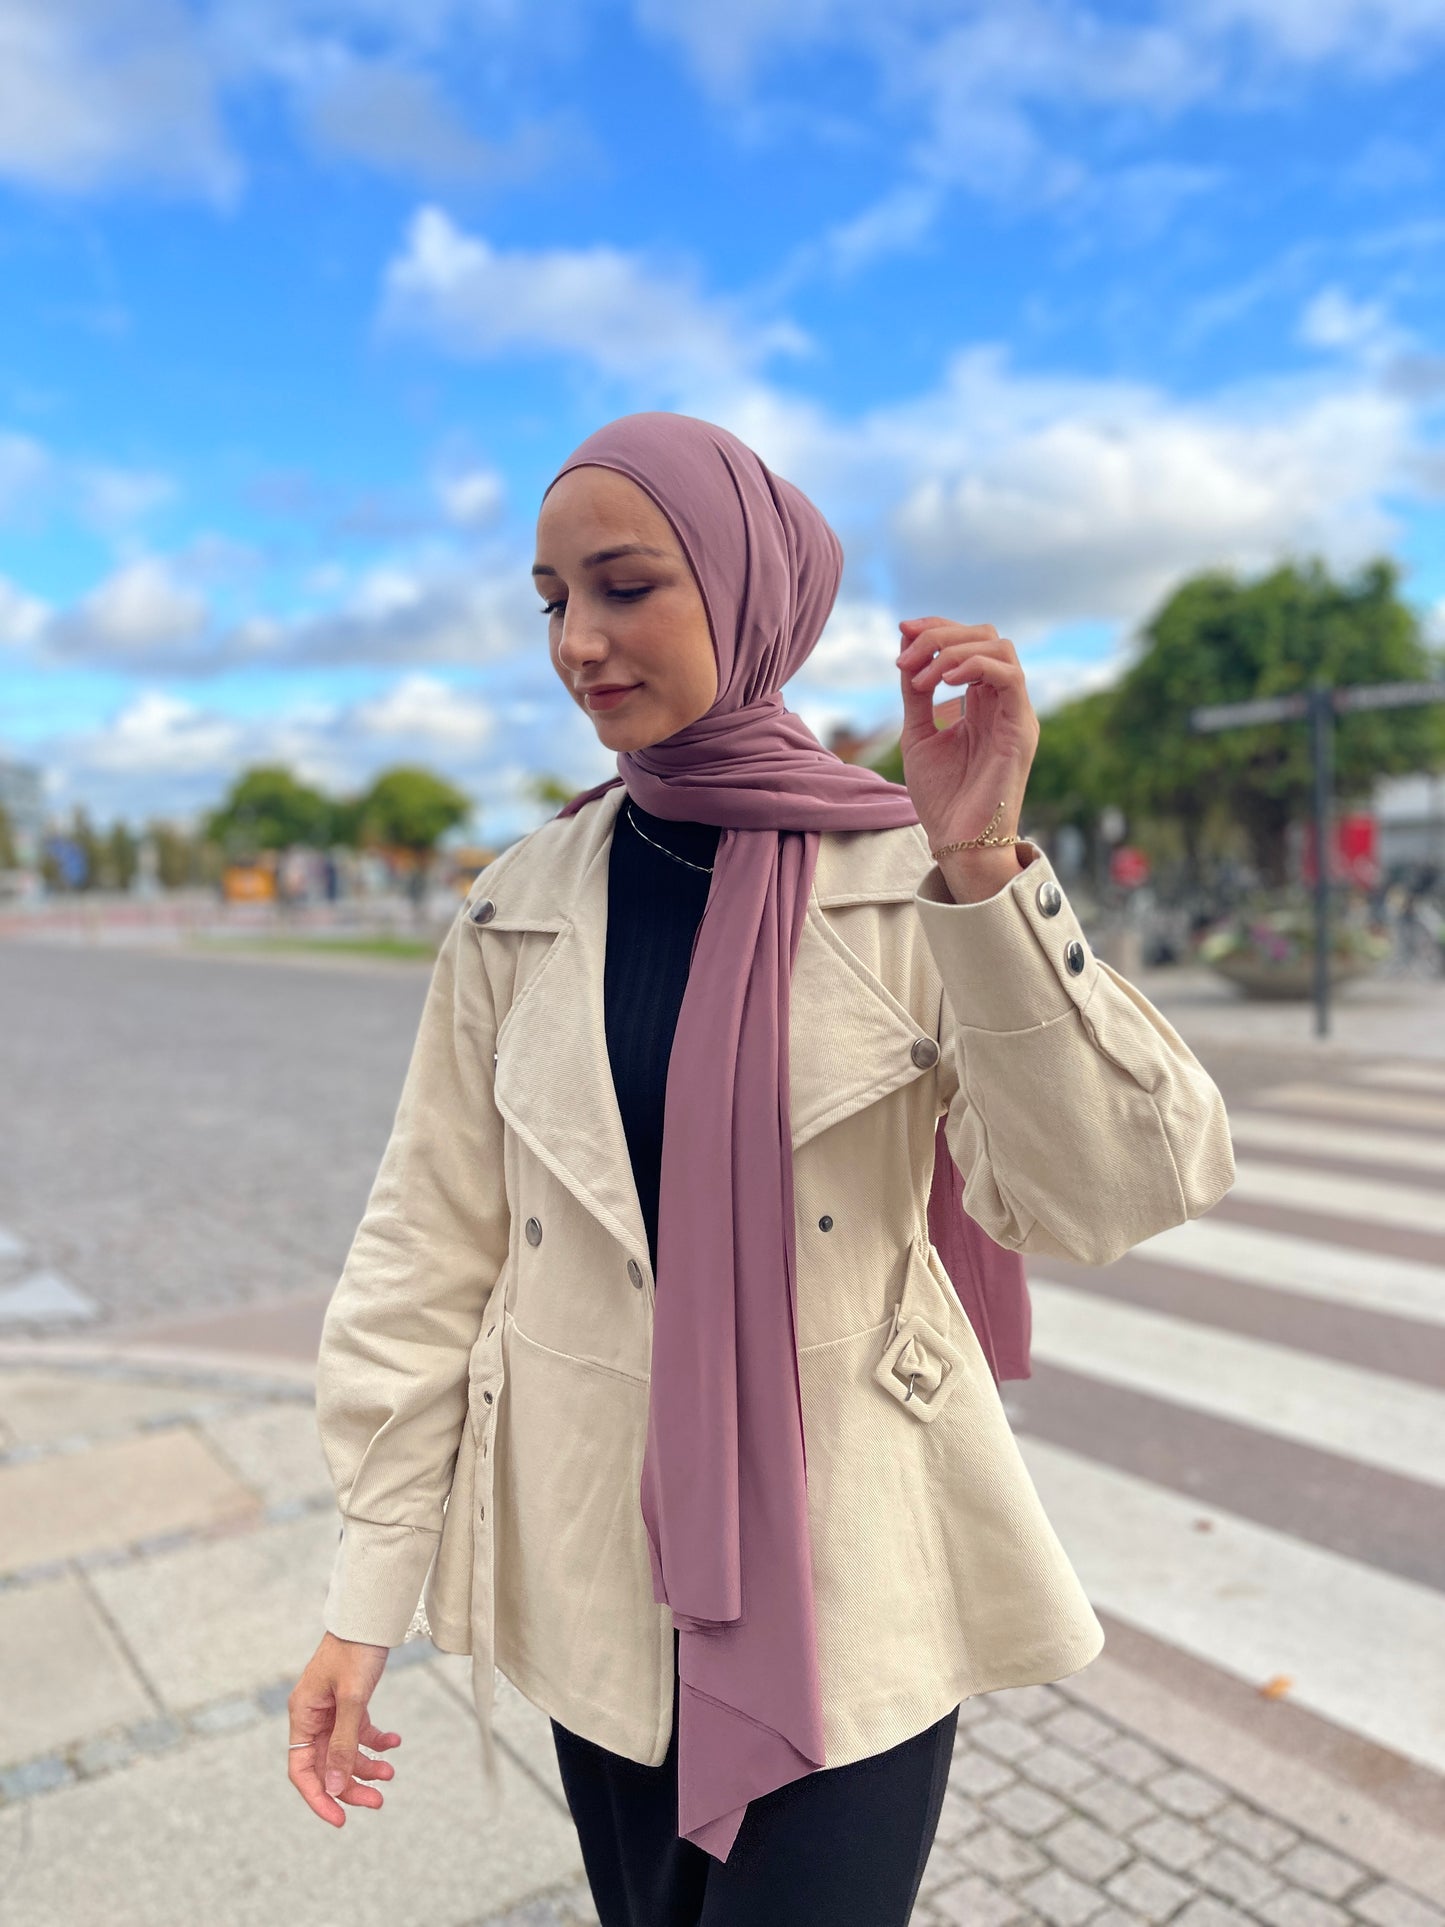 Lycra Hijab - ly11